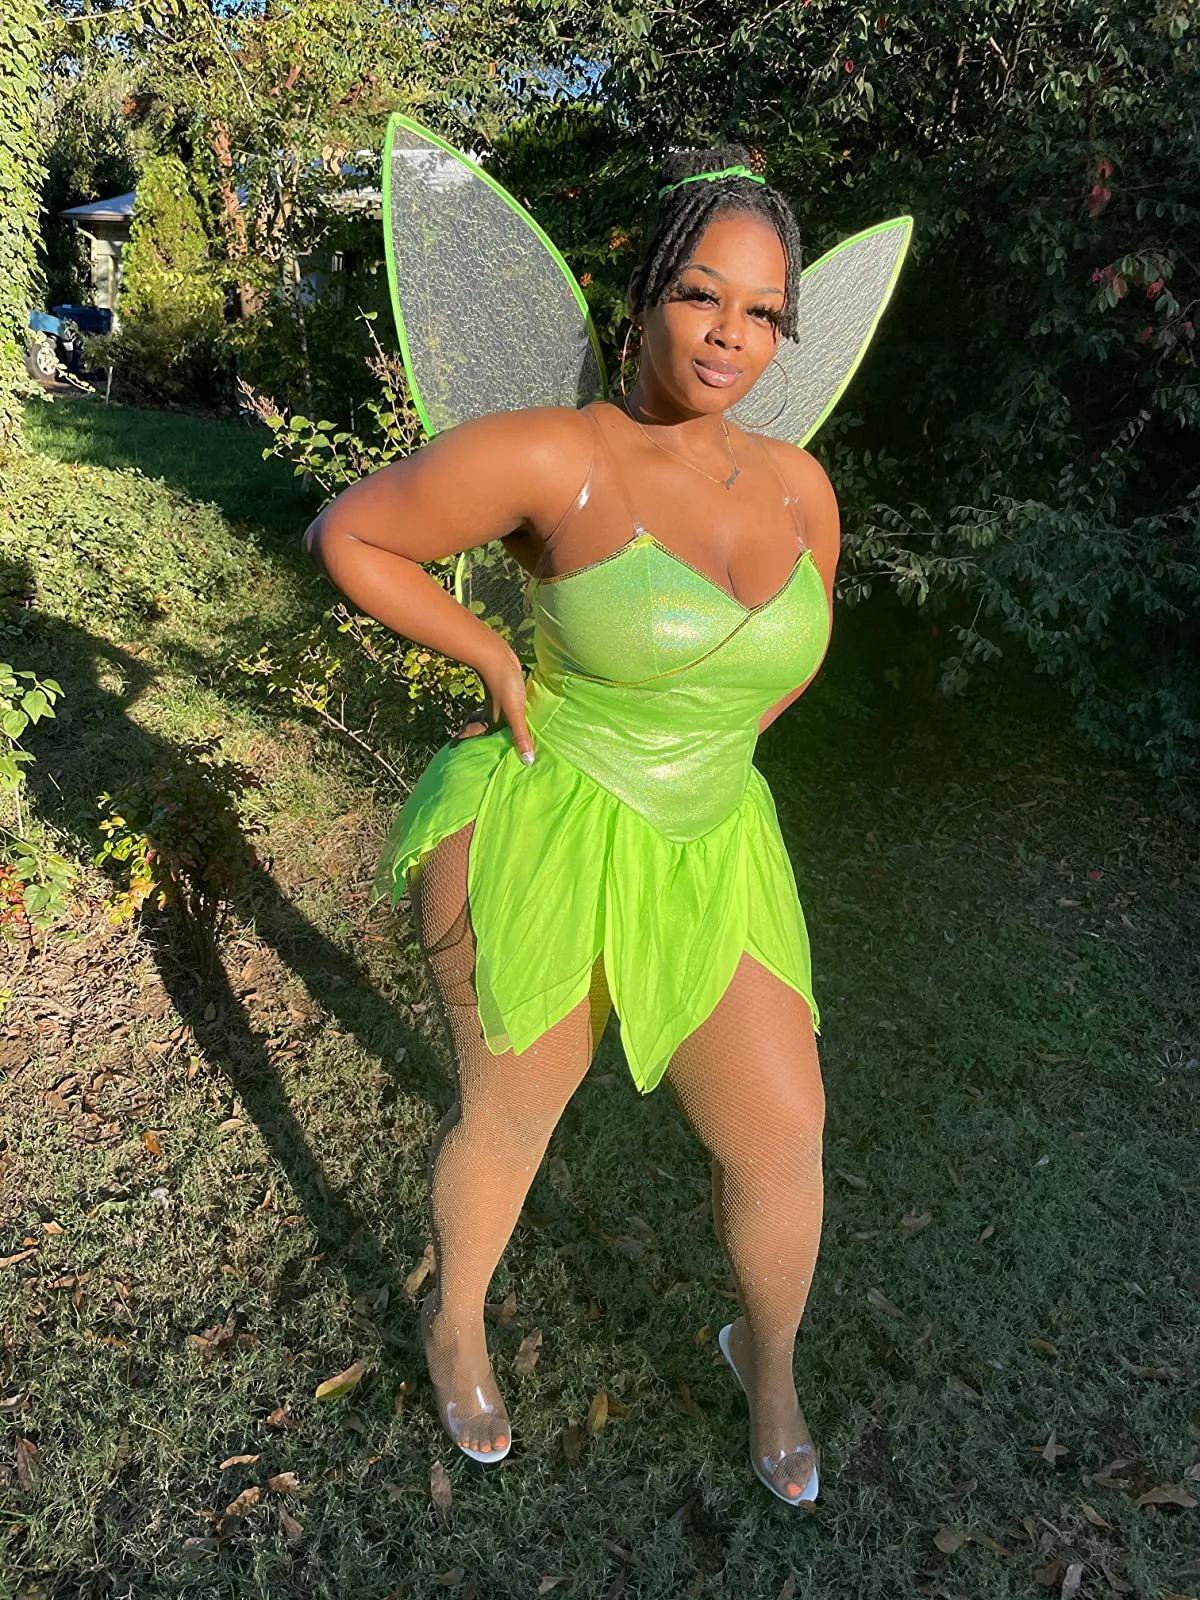 2022 Jul Halloween Costume Cosplay Dress Naughty Fairy Wings Costume